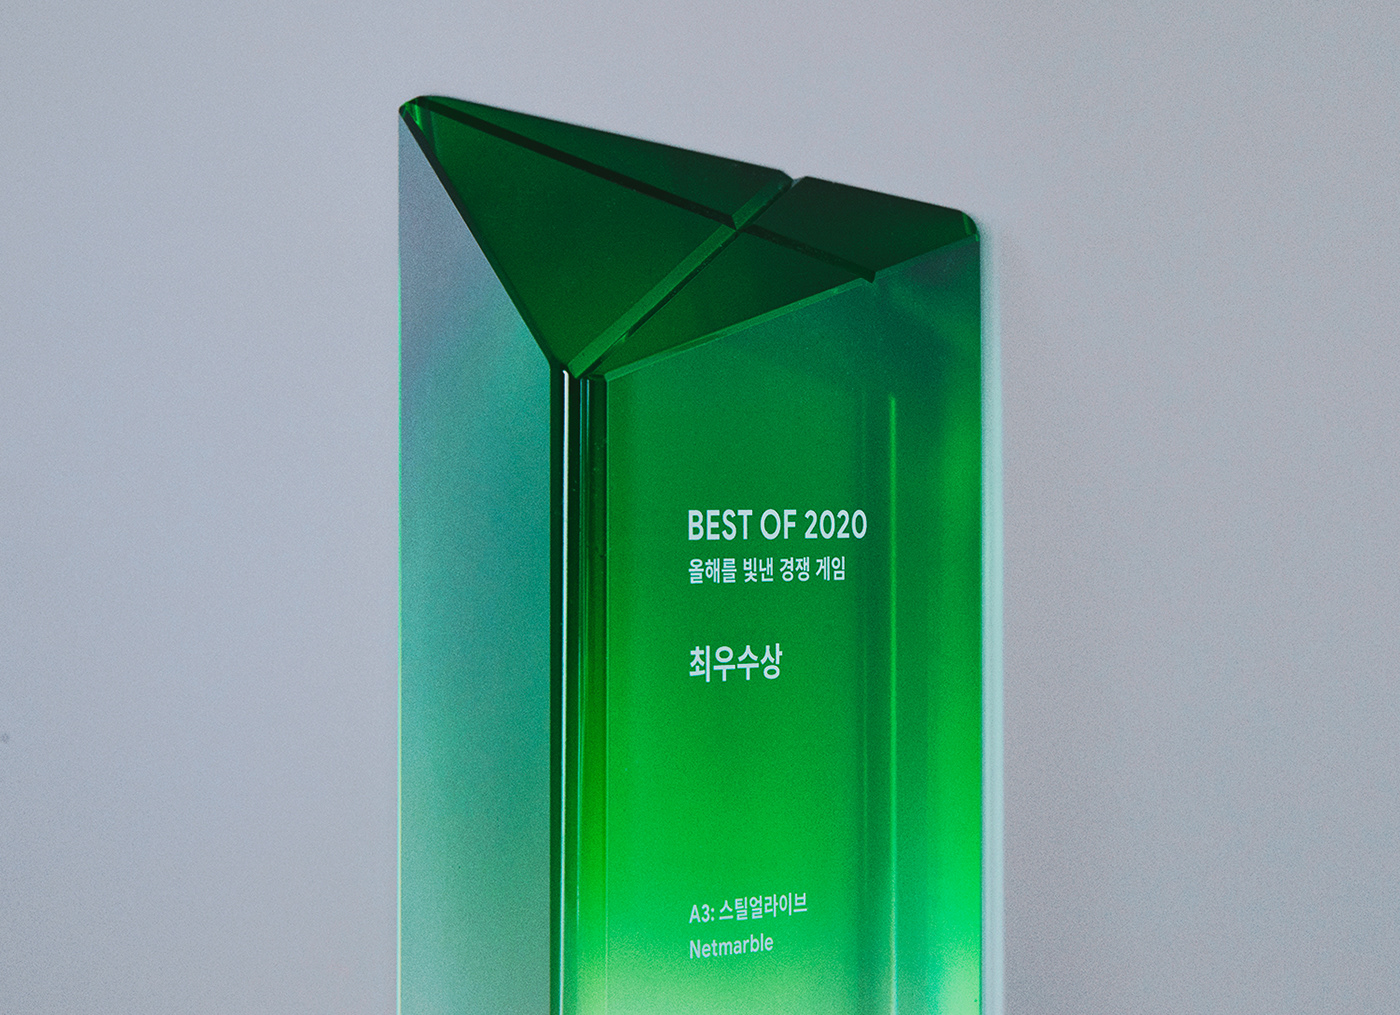 Awards sculpture trophy award Best of google Google Play Google Design material